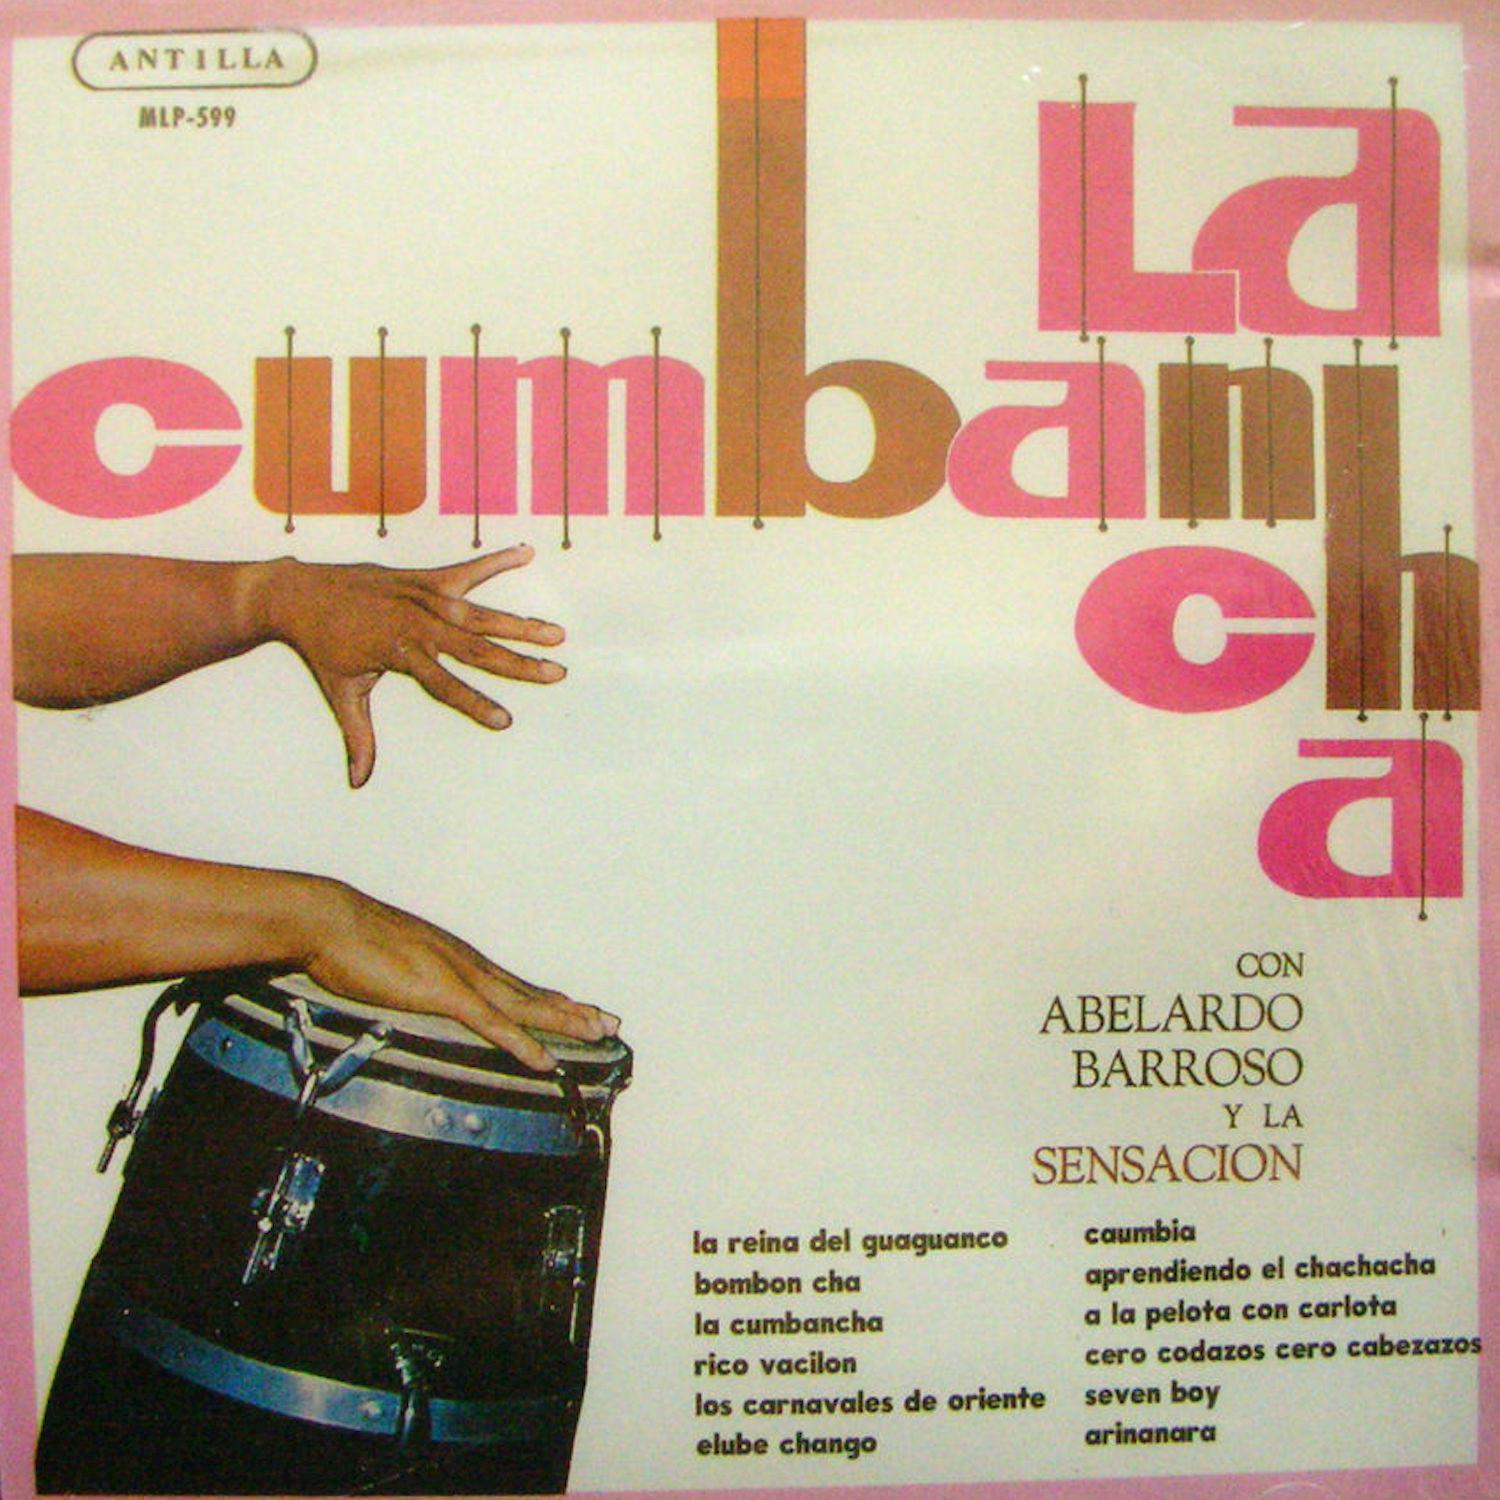 La Cumbancha